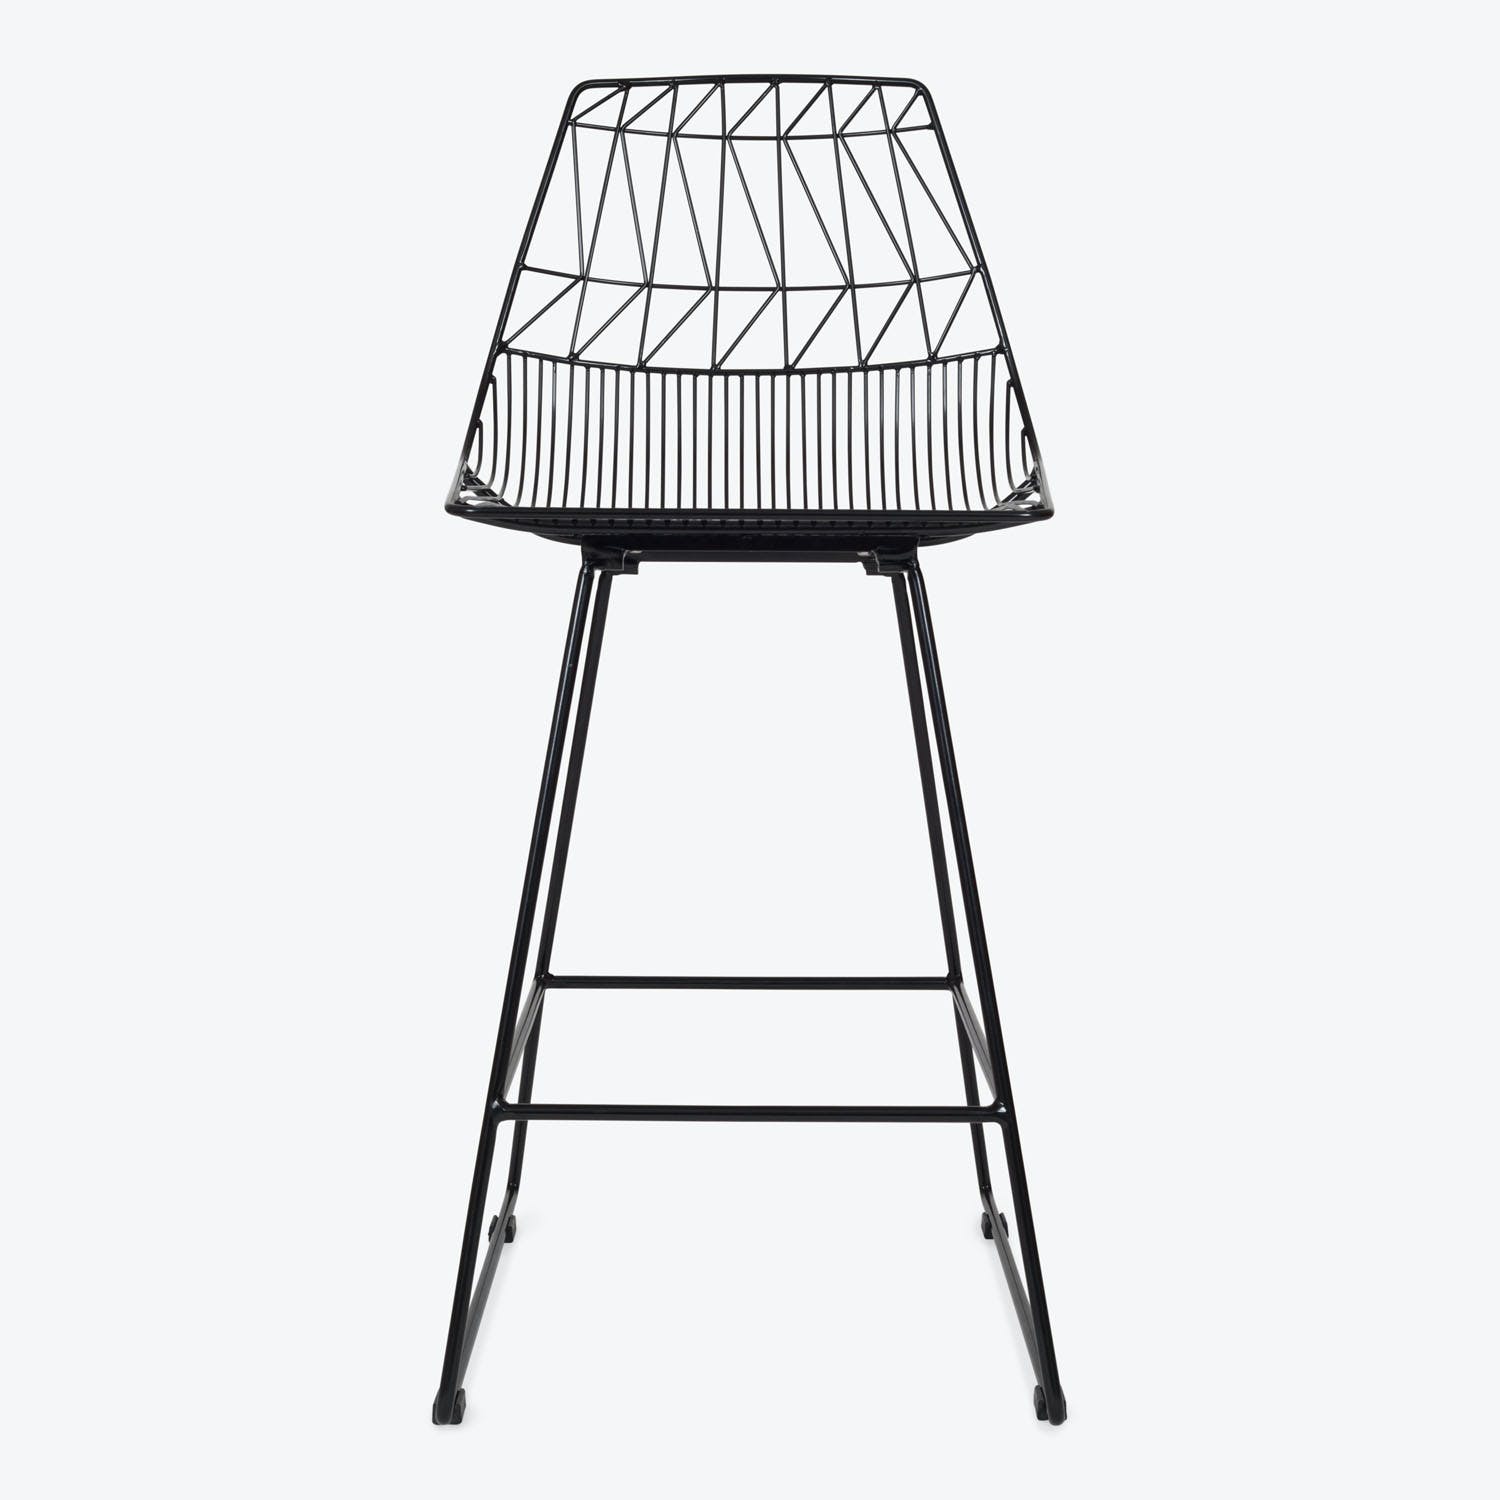 Modern-style bar stool with geometric design and minimalist aesthetic.